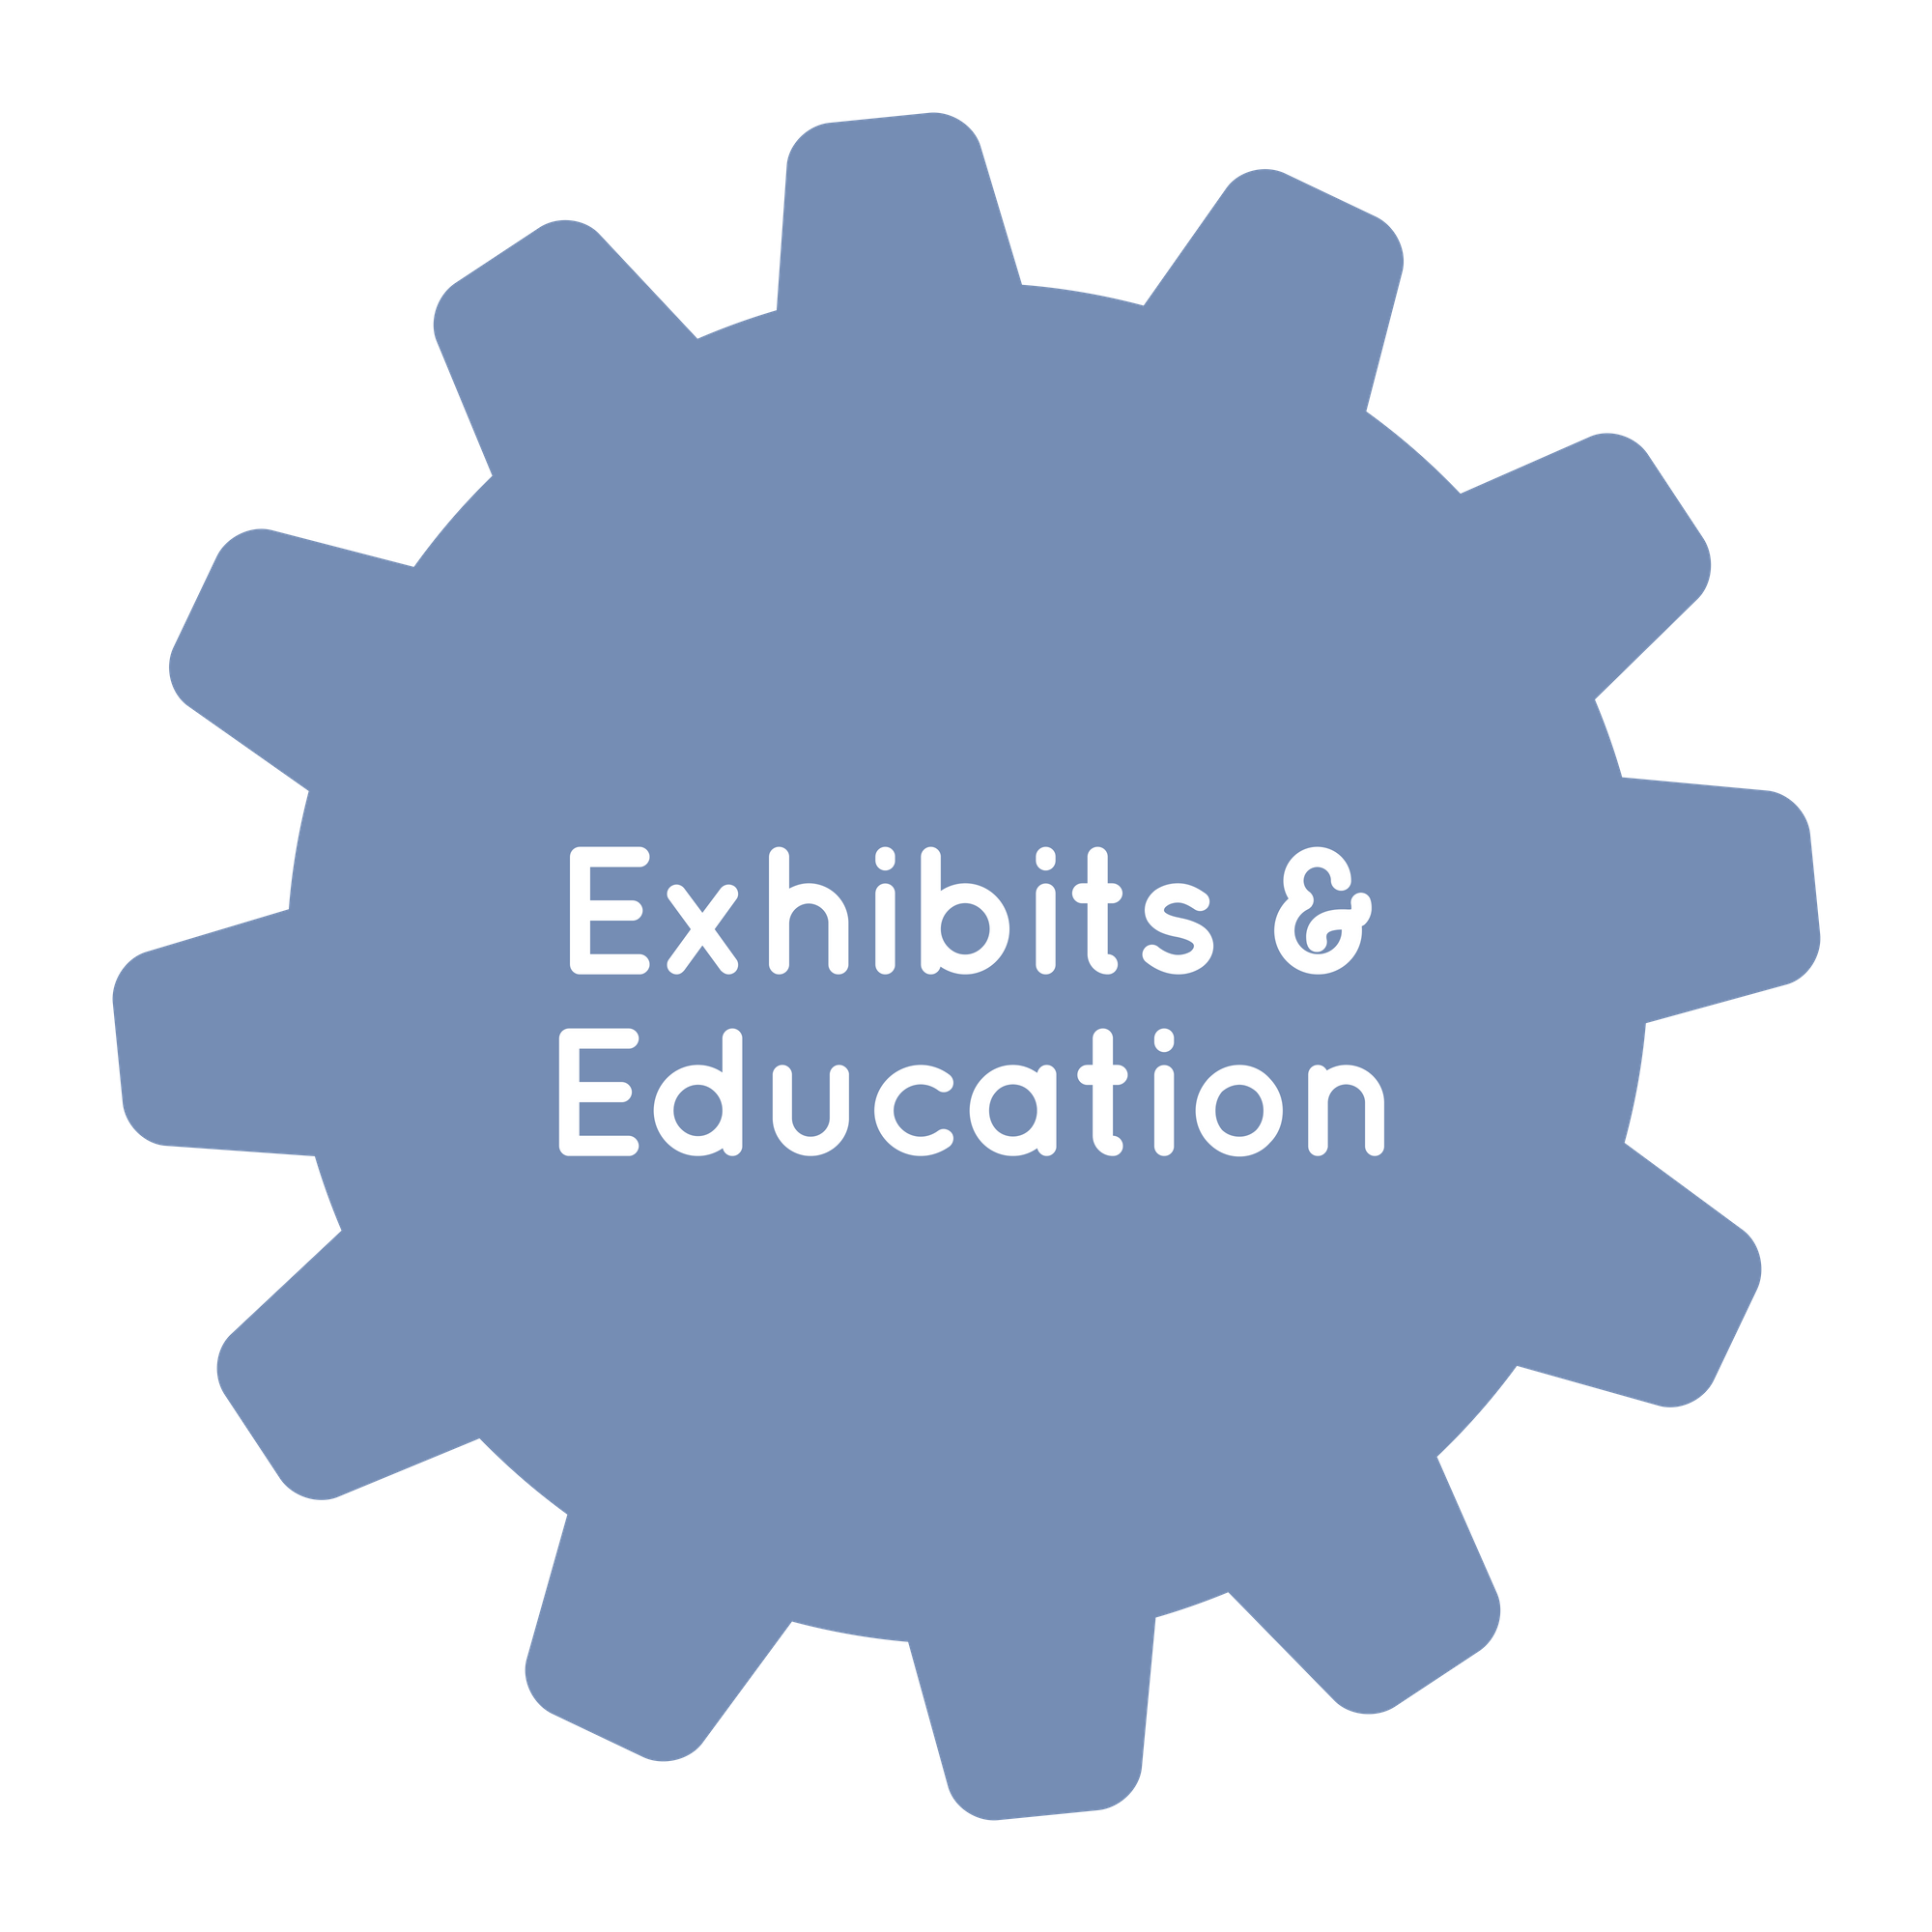 Exhibits/Education office of Children's Museum of Atlanta